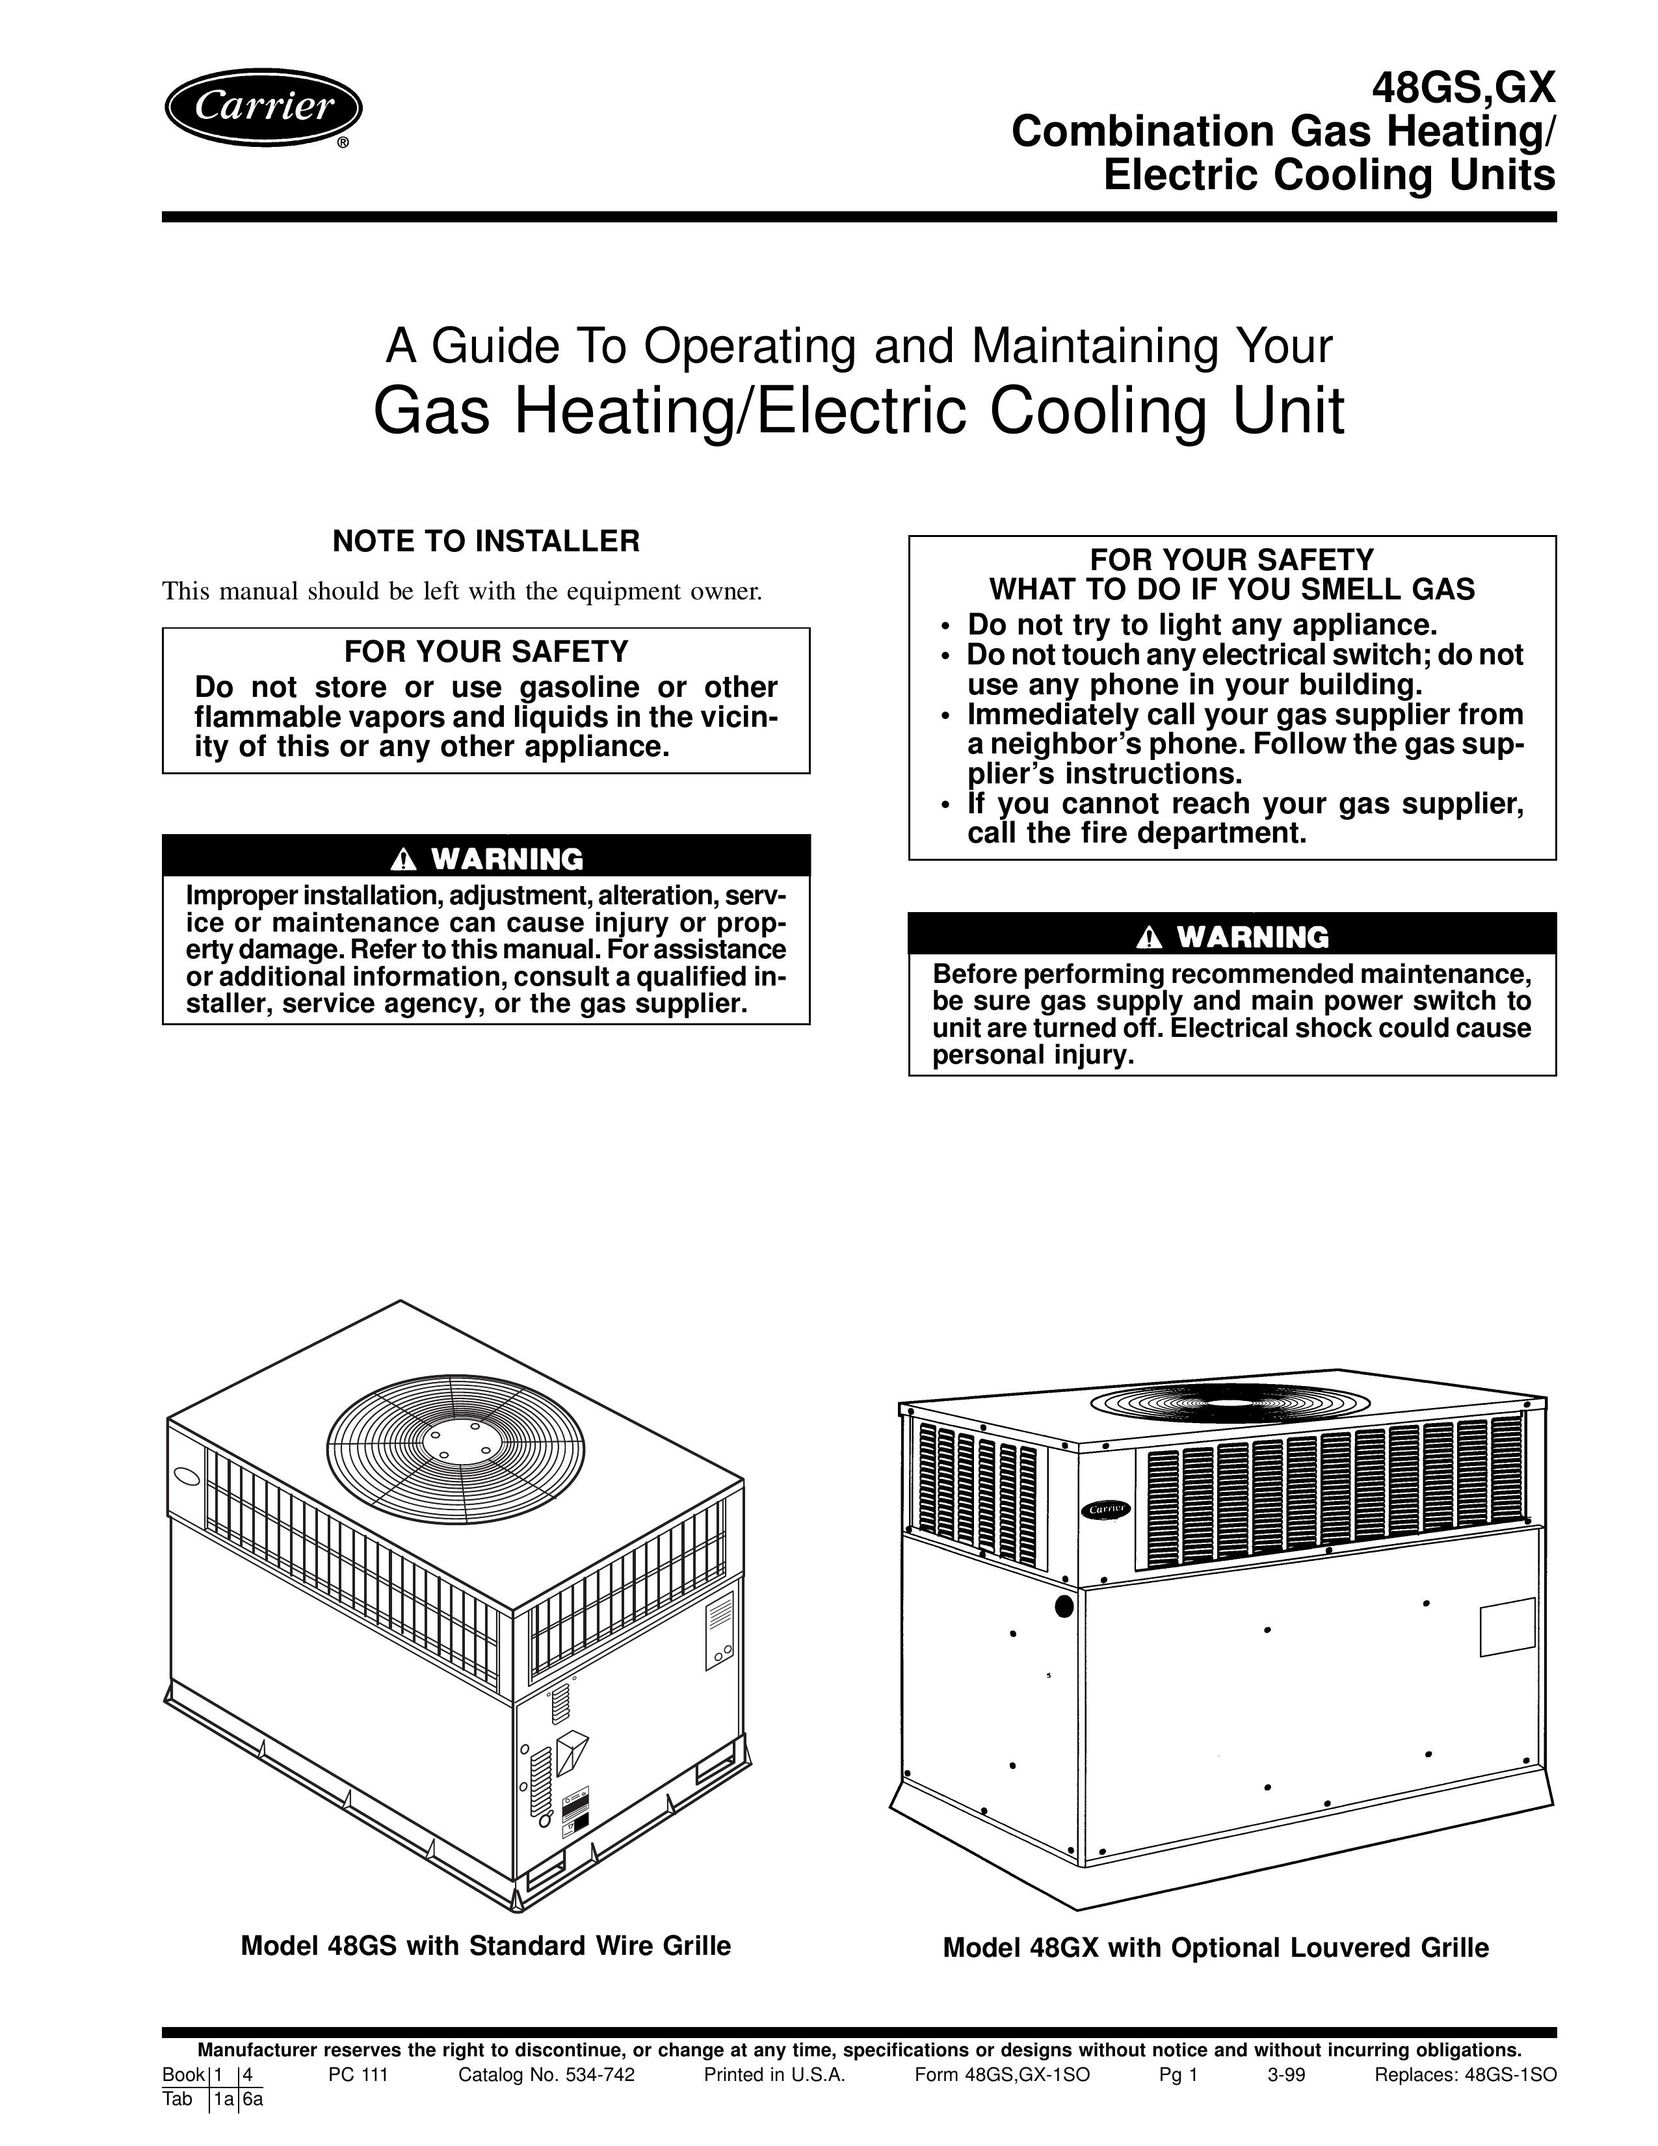 Carrier 48GX Gas Heater User Manual